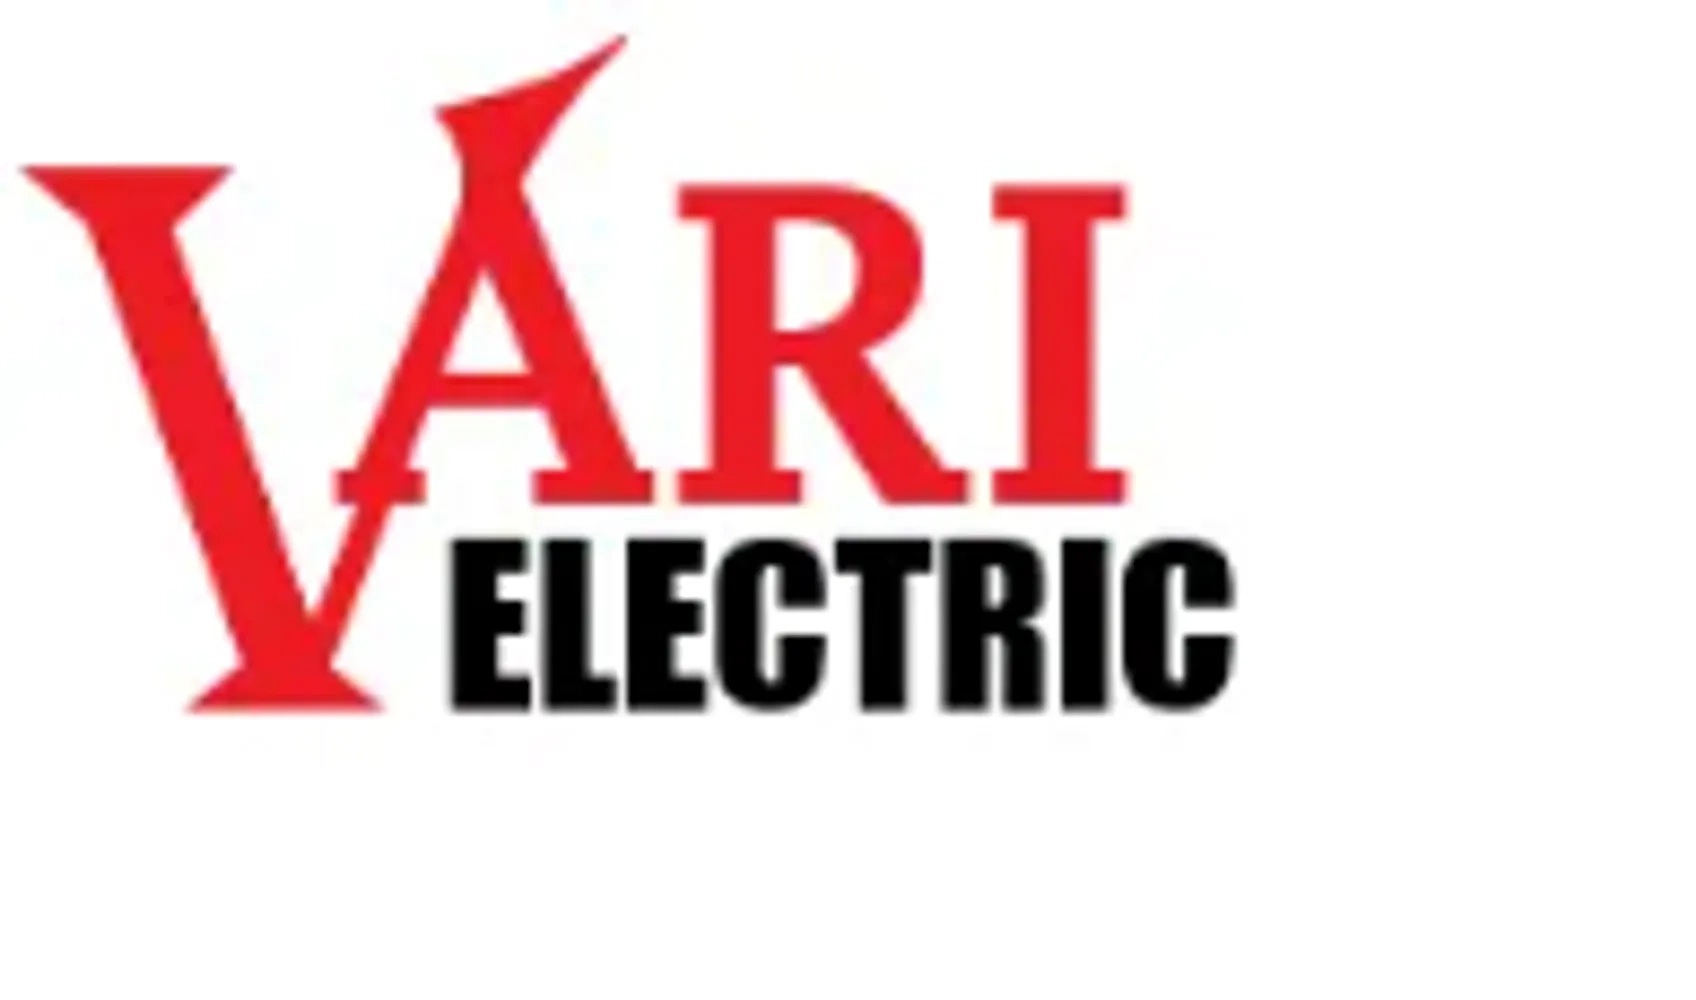 Vari Electric Logo